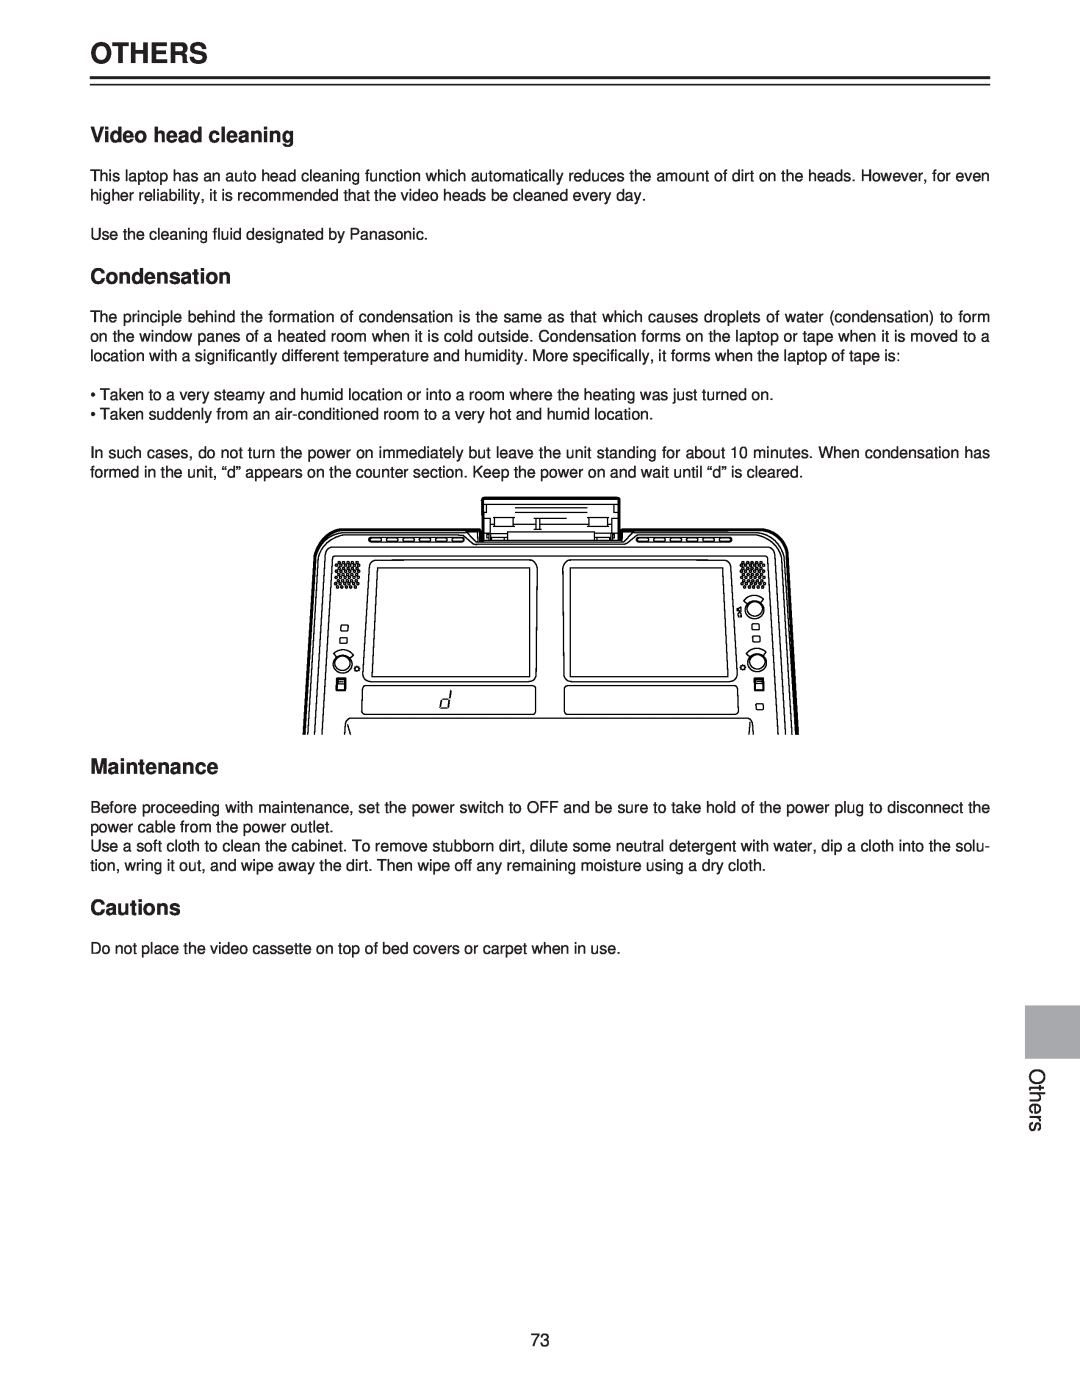 Panasonic AJ-LT85P manual Others, Video head cleaning, Condensation, Maintenance, Cautions 